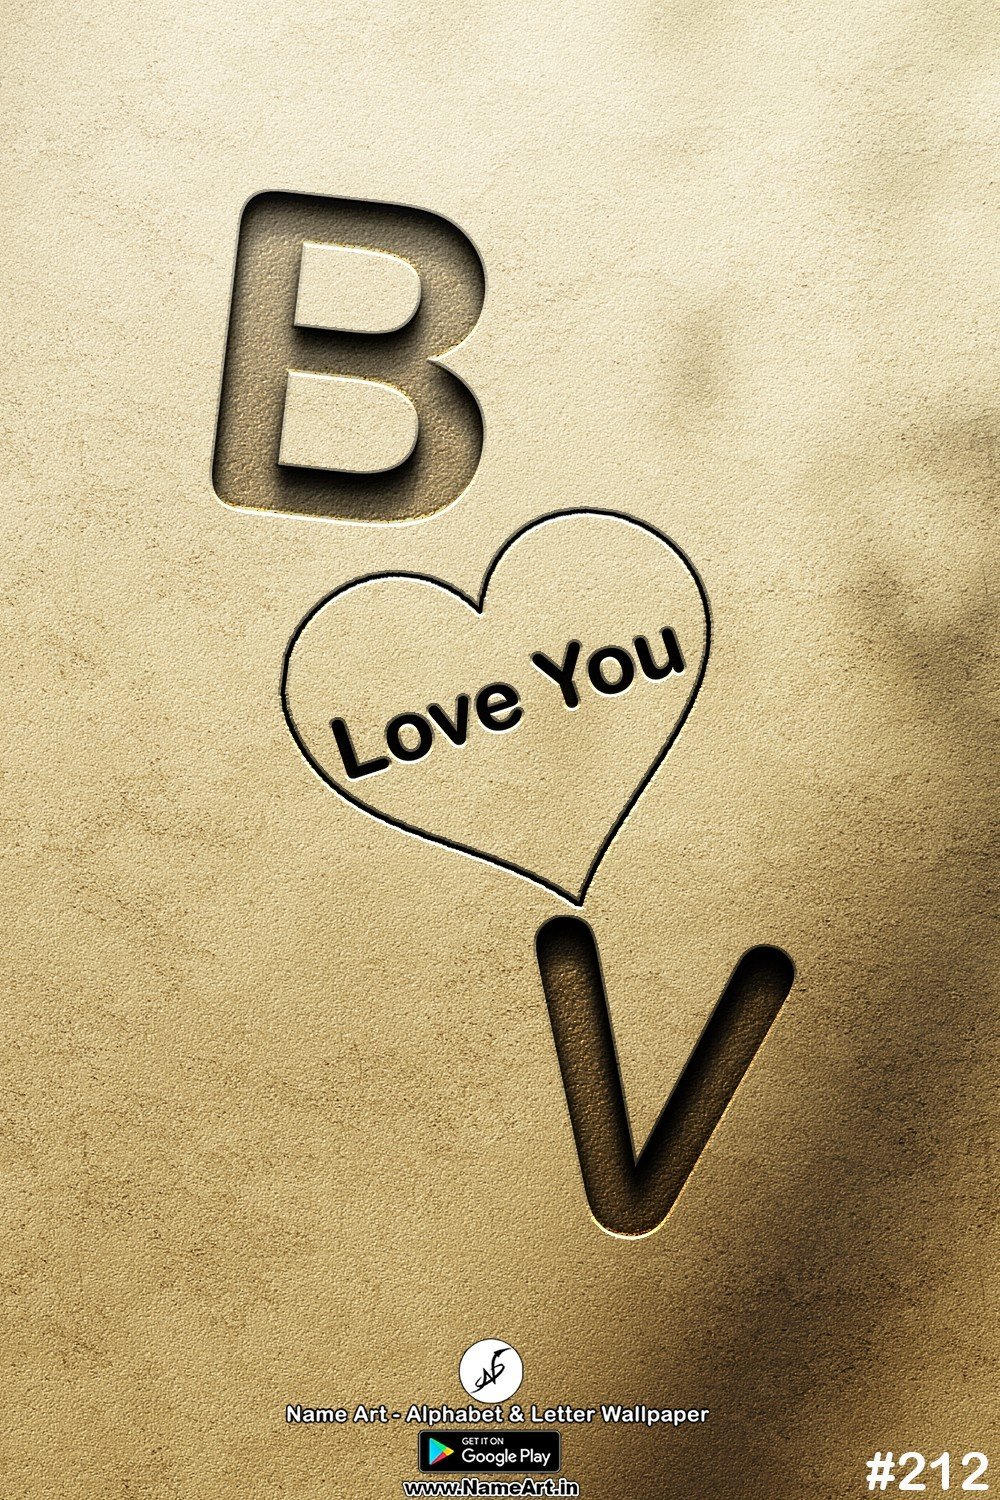 BV | Whatsapp Status DP BV | BV Love Status Cute Couples Whatsapp Status DP !! | New Whatsapp Status DP BV Images |